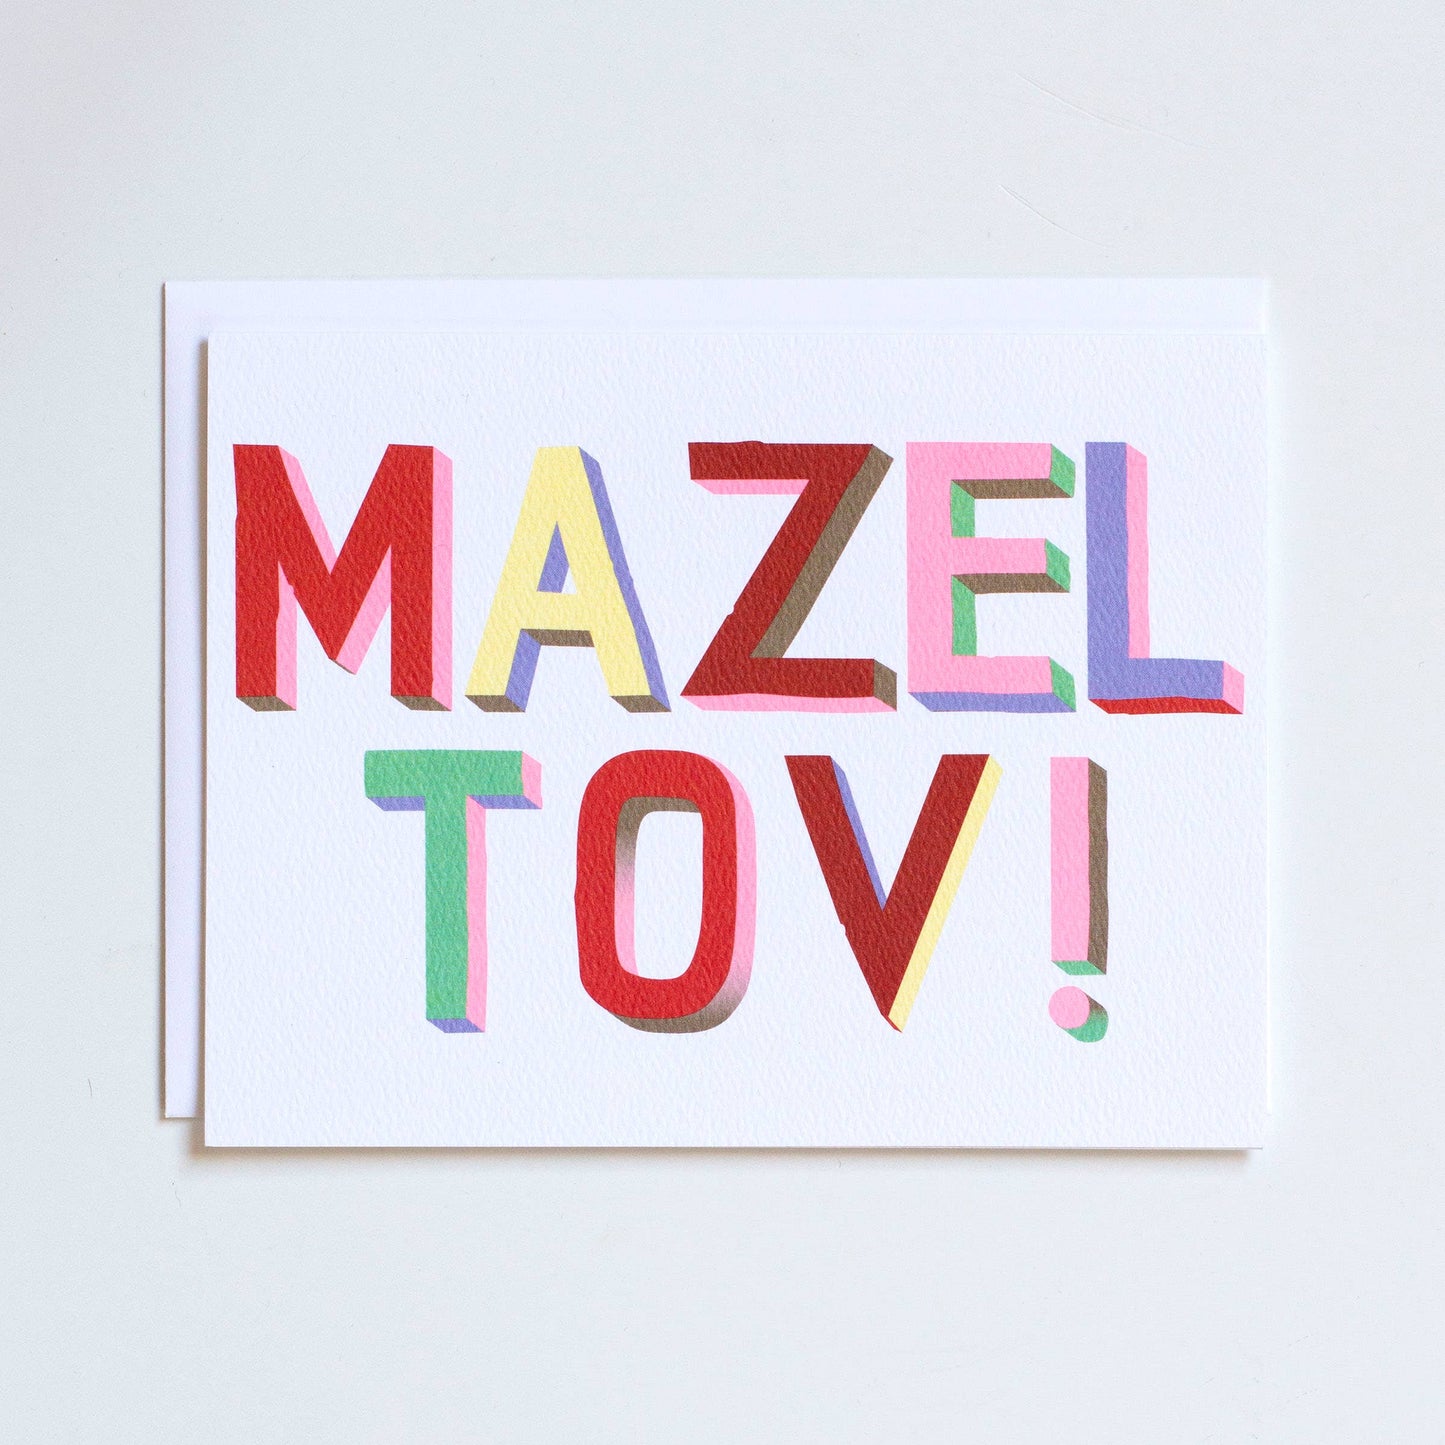 Mazel Tov Greeting Card - The Crowd Went Wild